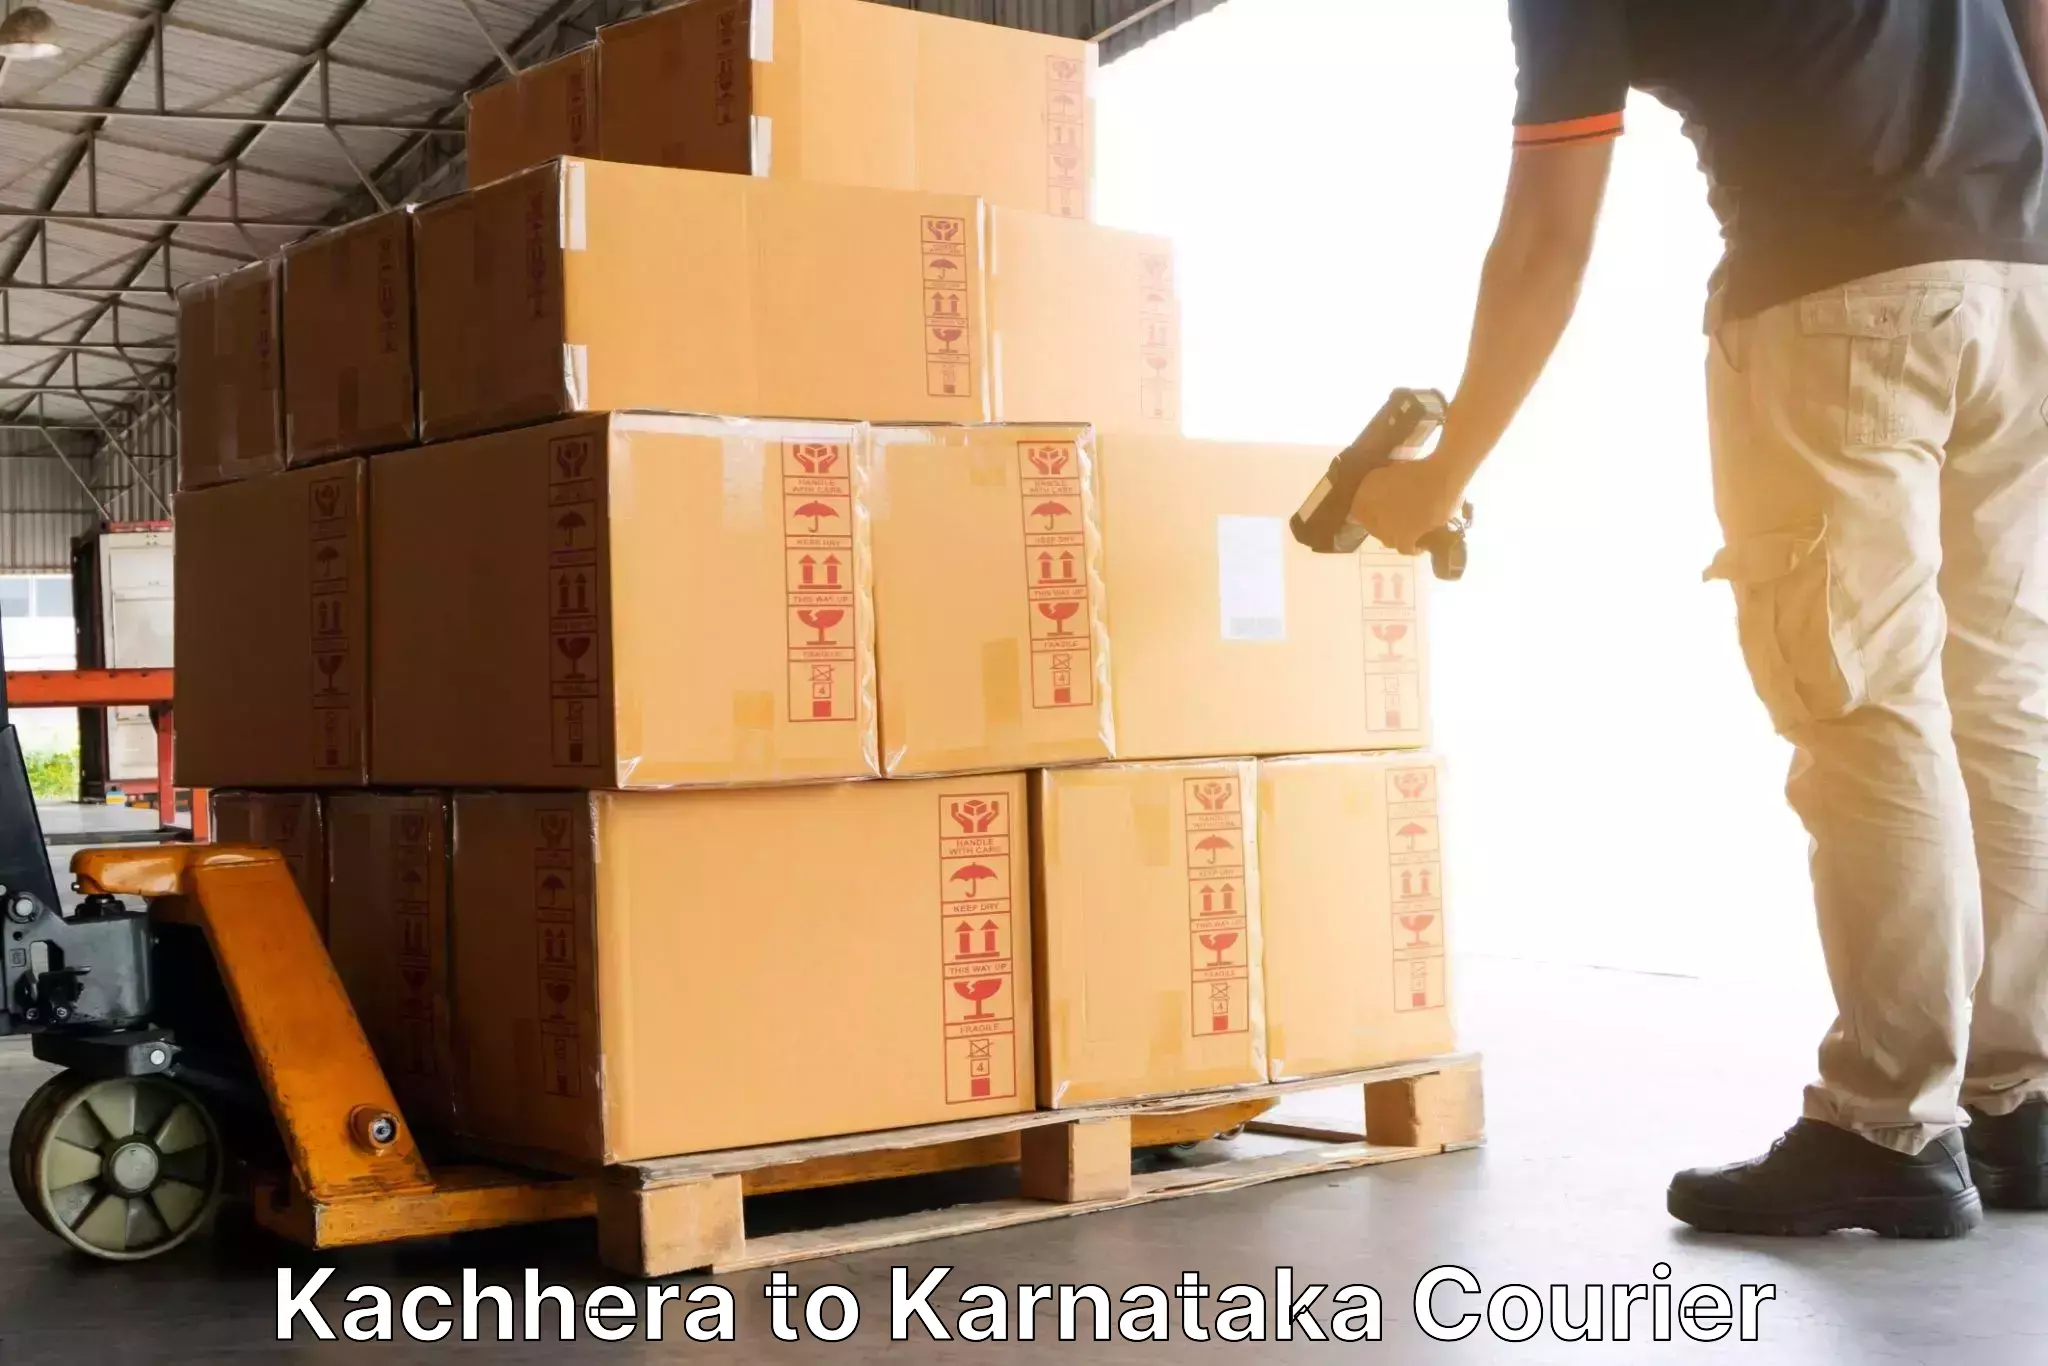 Next day courier Kachhera to Pedapudi